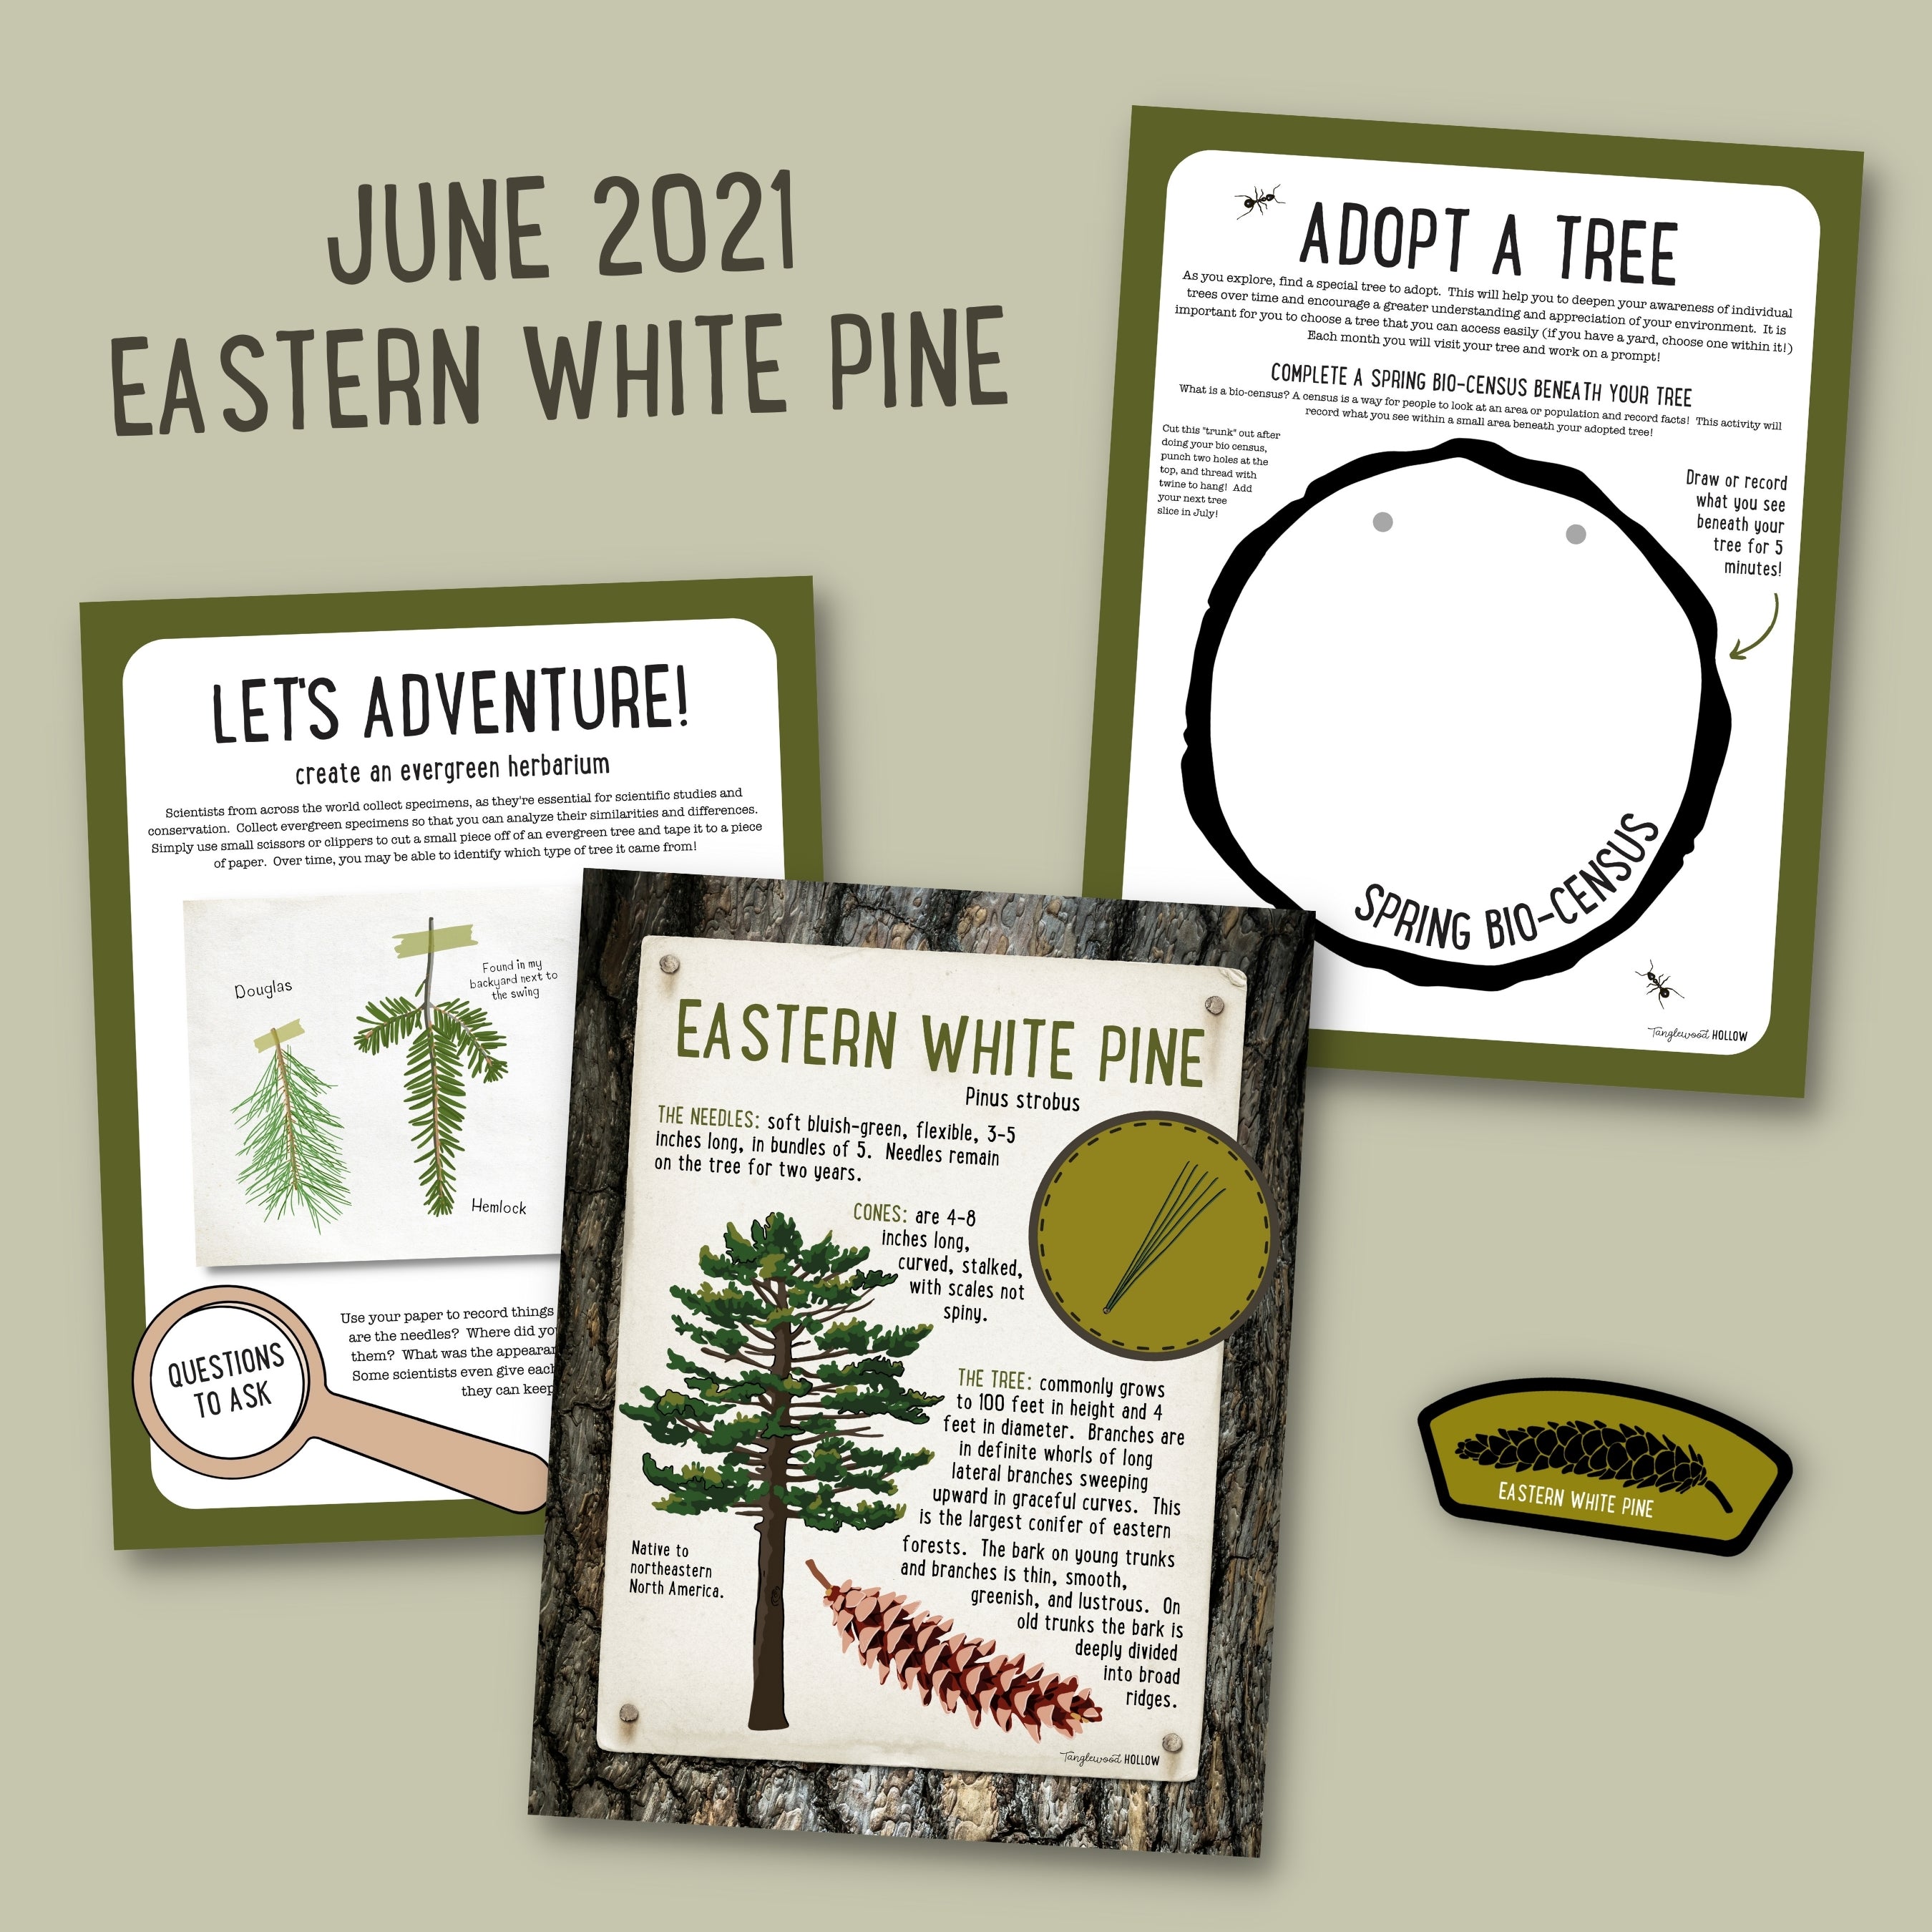 Exploring Eastern White Pine - A Digital Guide